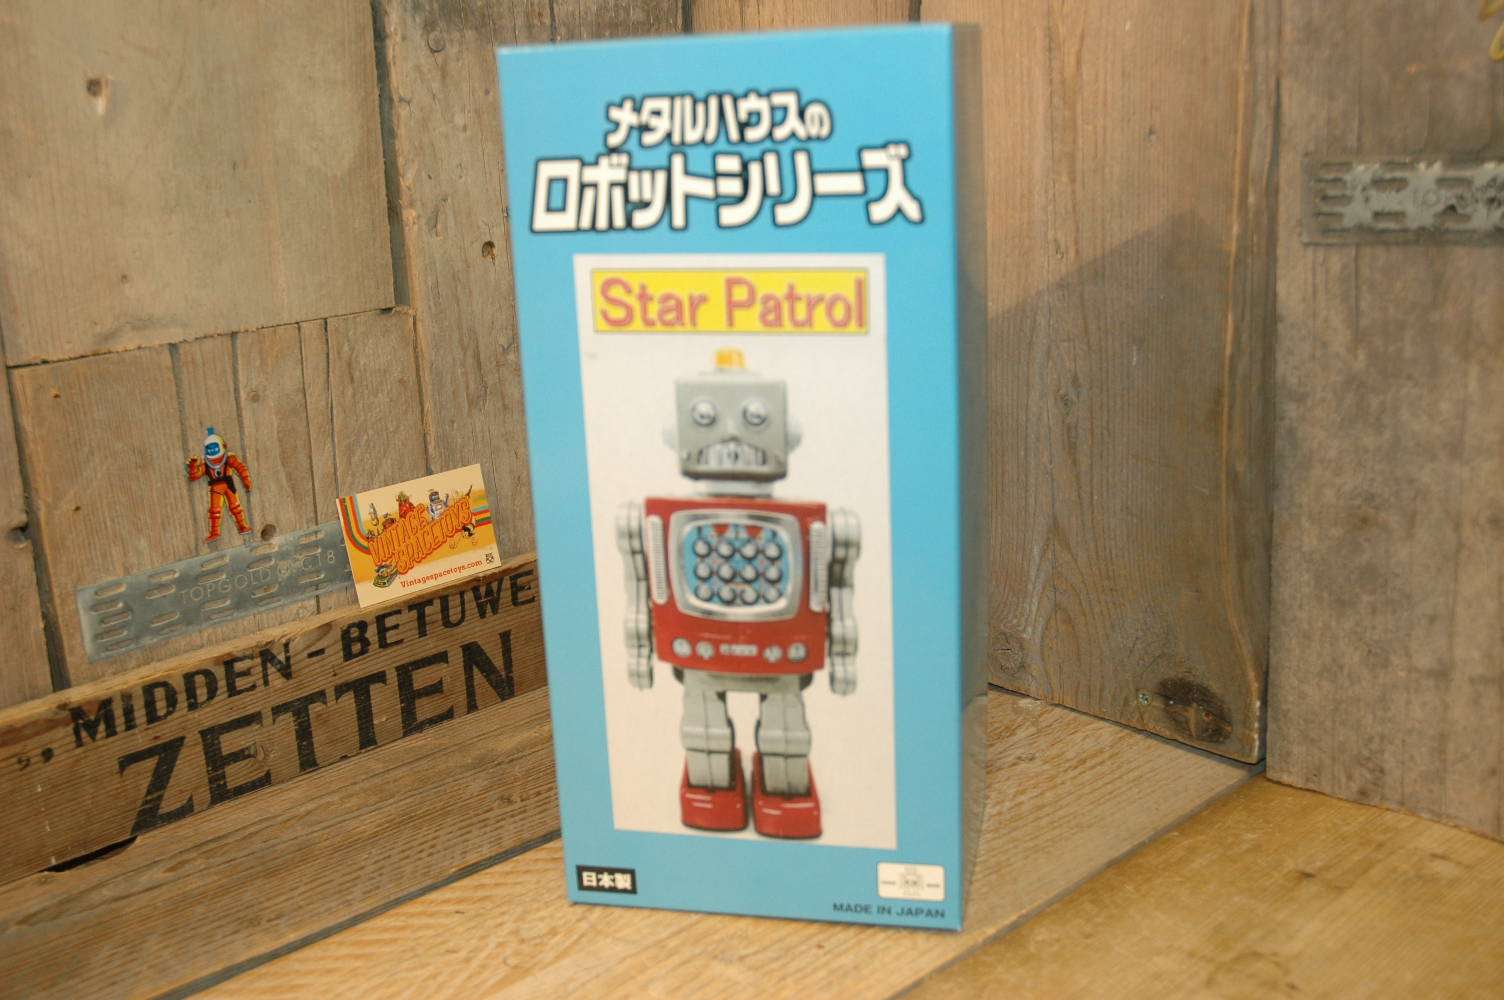 Metal House - Star Patrol Robot